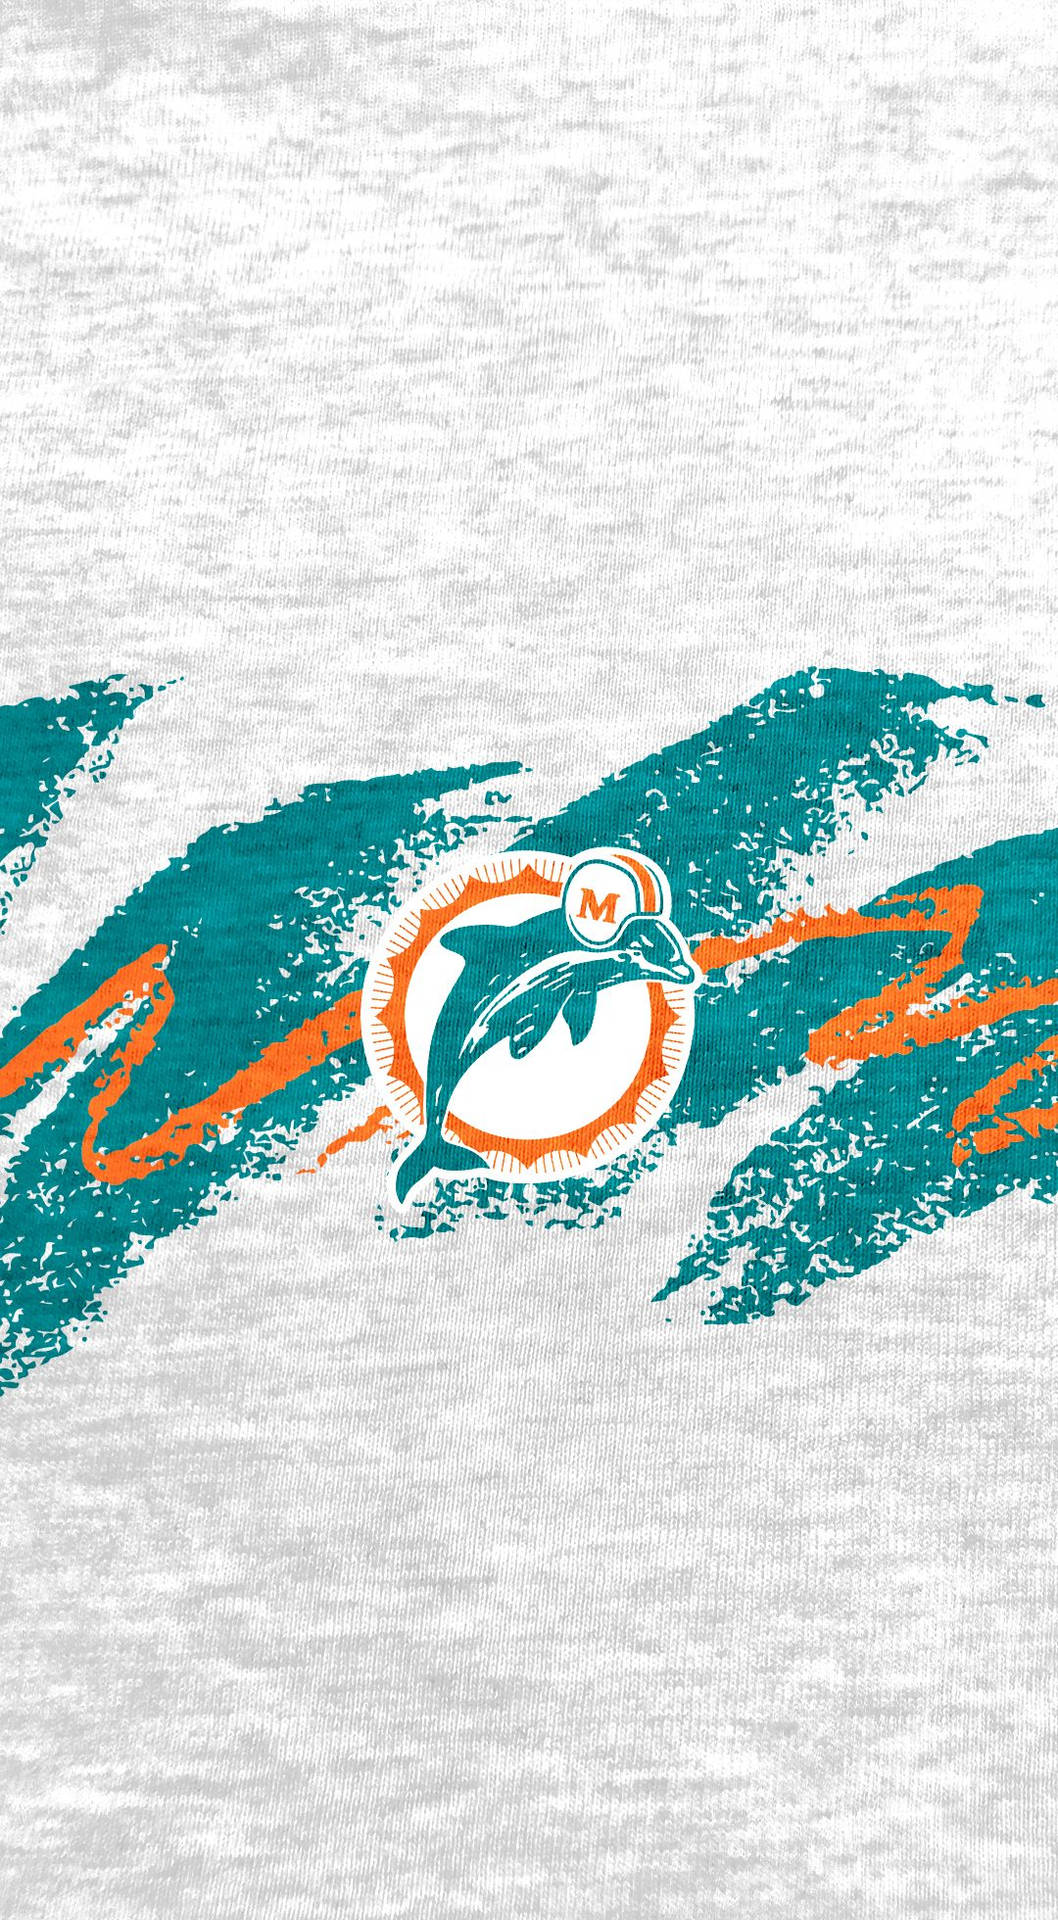 Vis din støtte for Miami Dolphins med denne iPhone papir tapet. Wallpaper